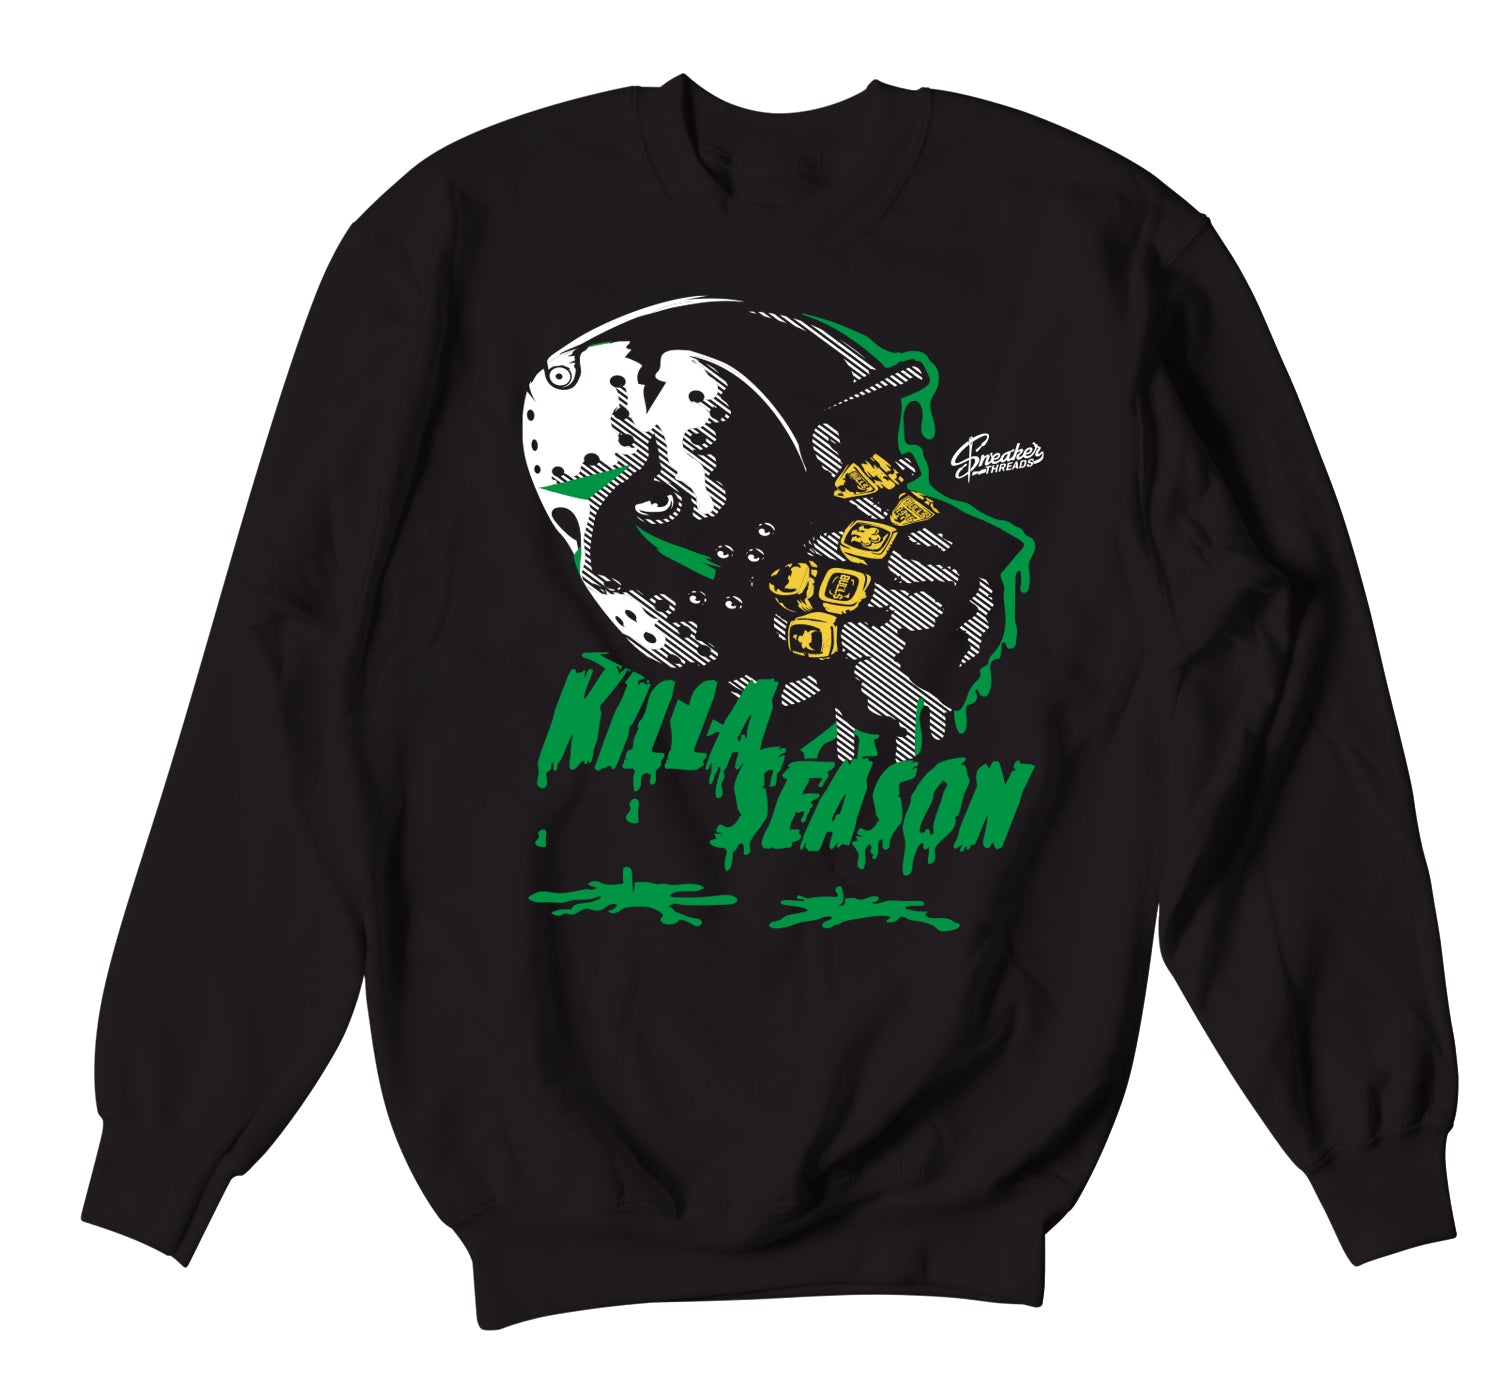 Retro 3 Pine Green Sweater - Killa Season - Black